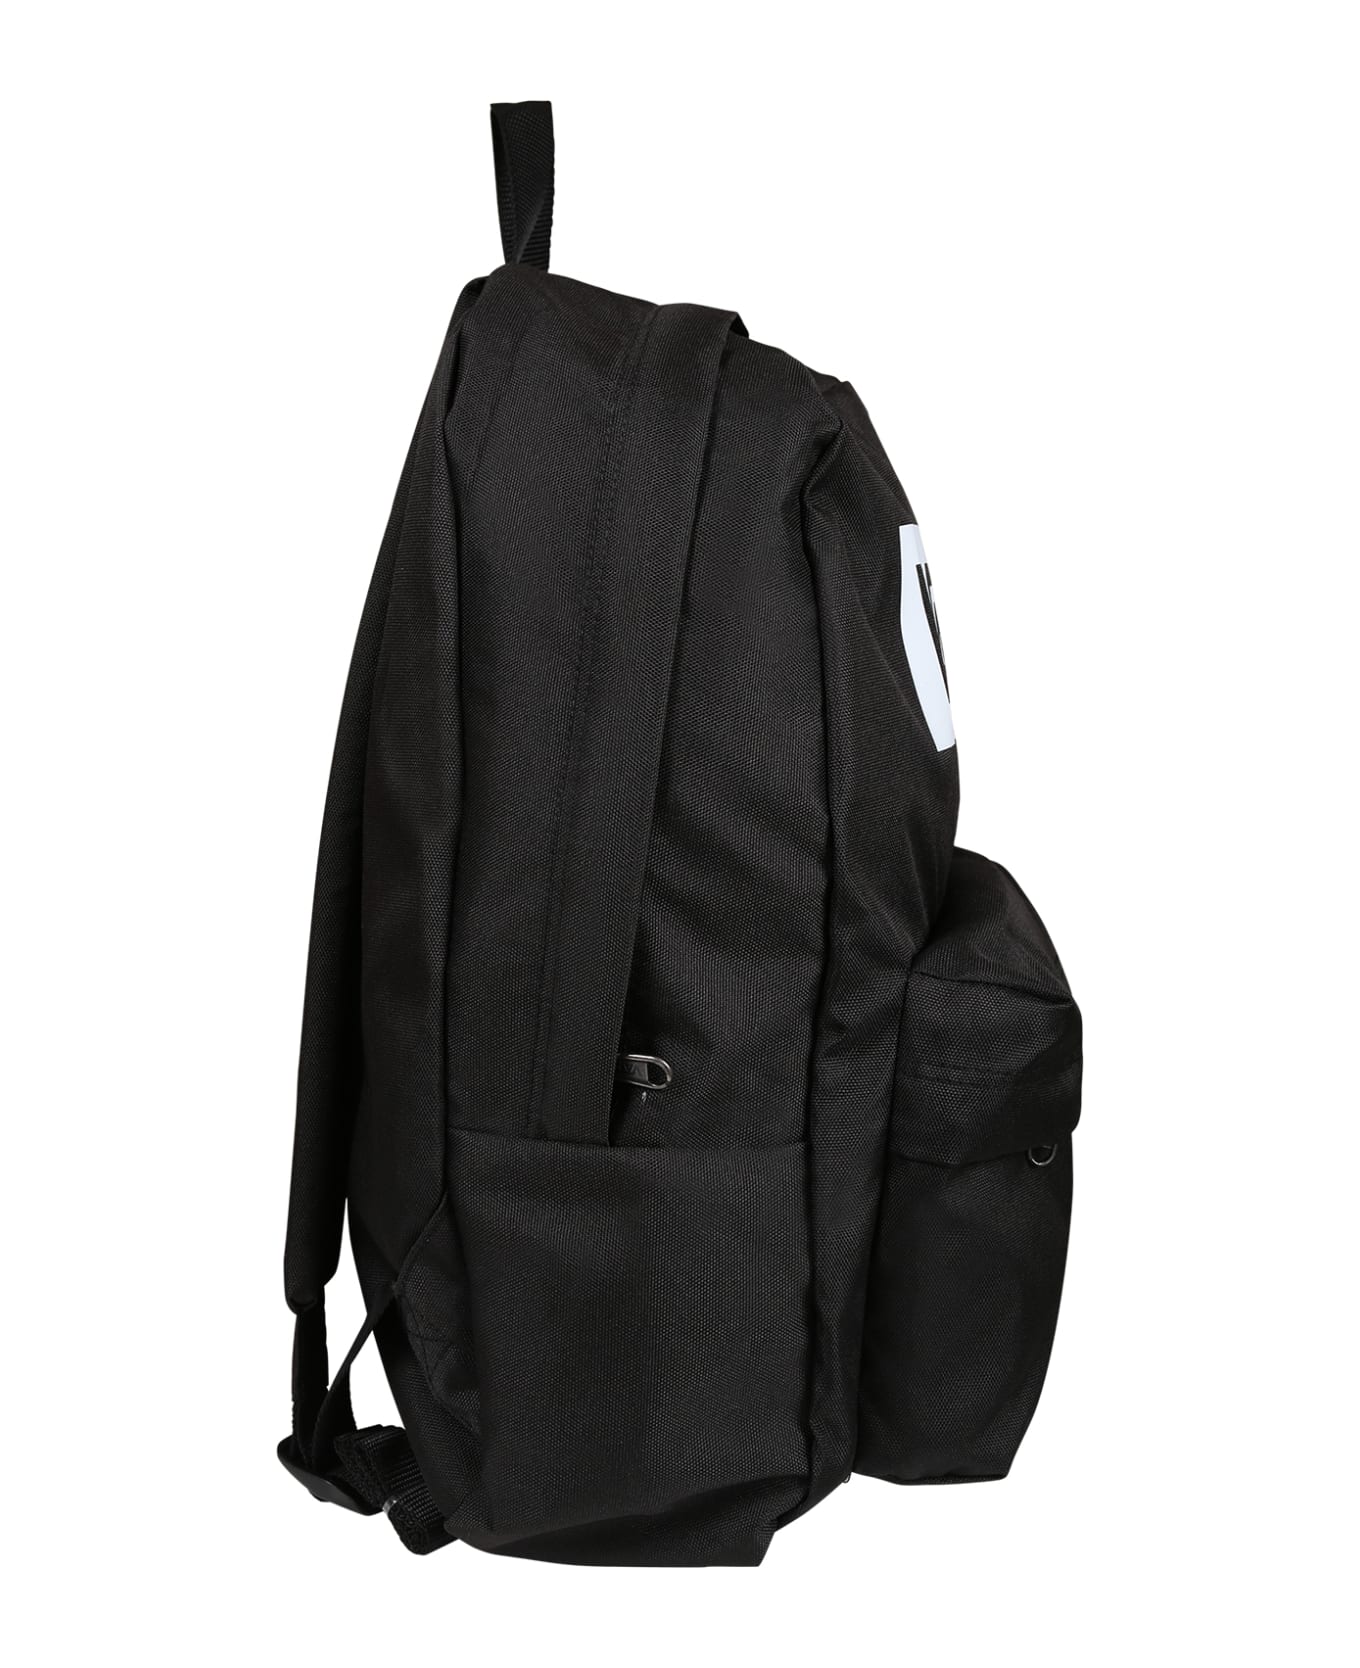 Vans Black Backpack For Kids With Iconic White Logo - Black